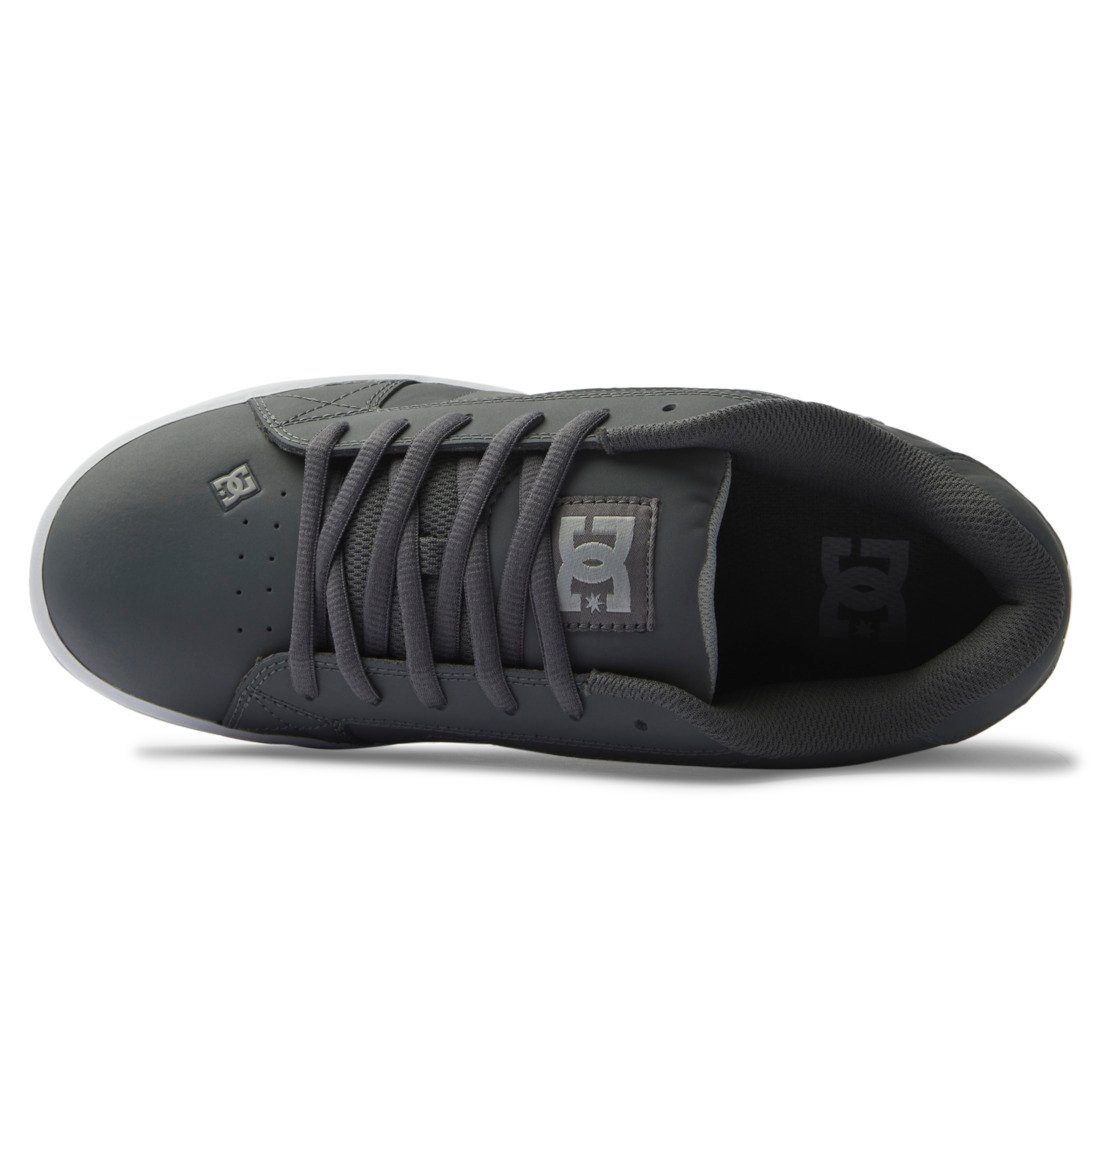 Sneaker Shoes Heather Net DC Grey/White